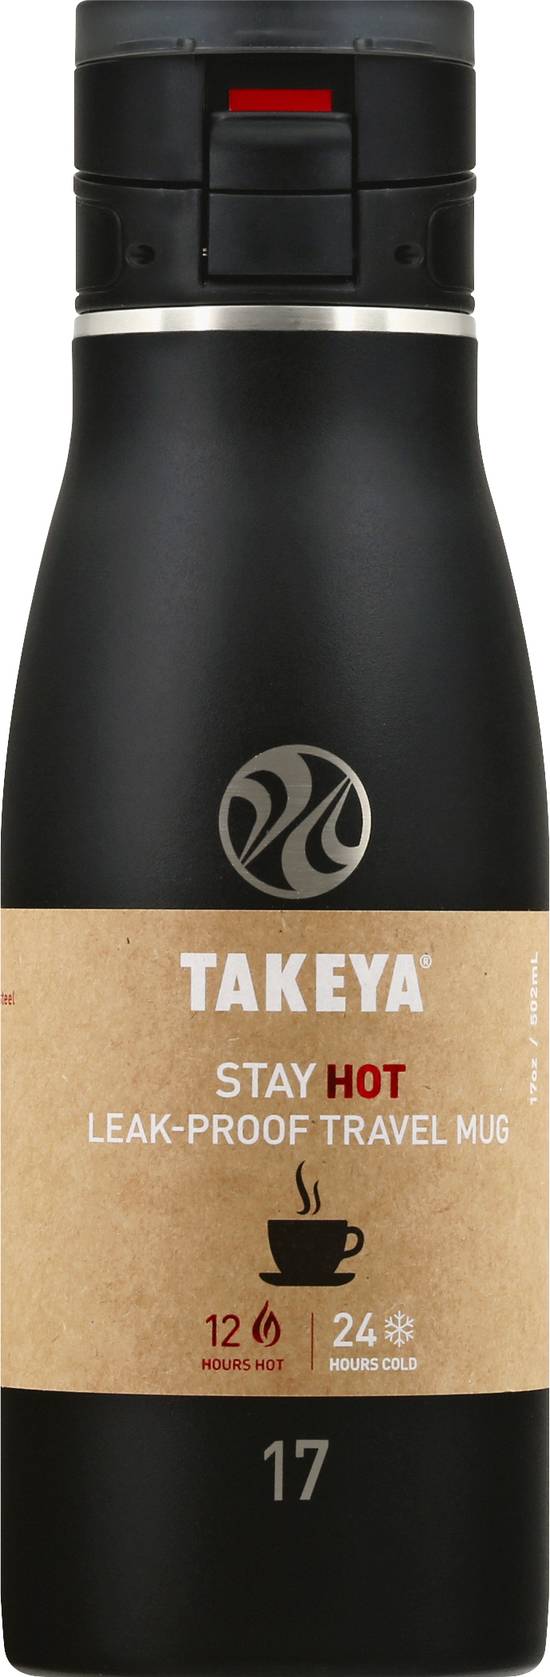 Takeya 17 oz Leak Proof Onyx Travel Mug (1 mug)